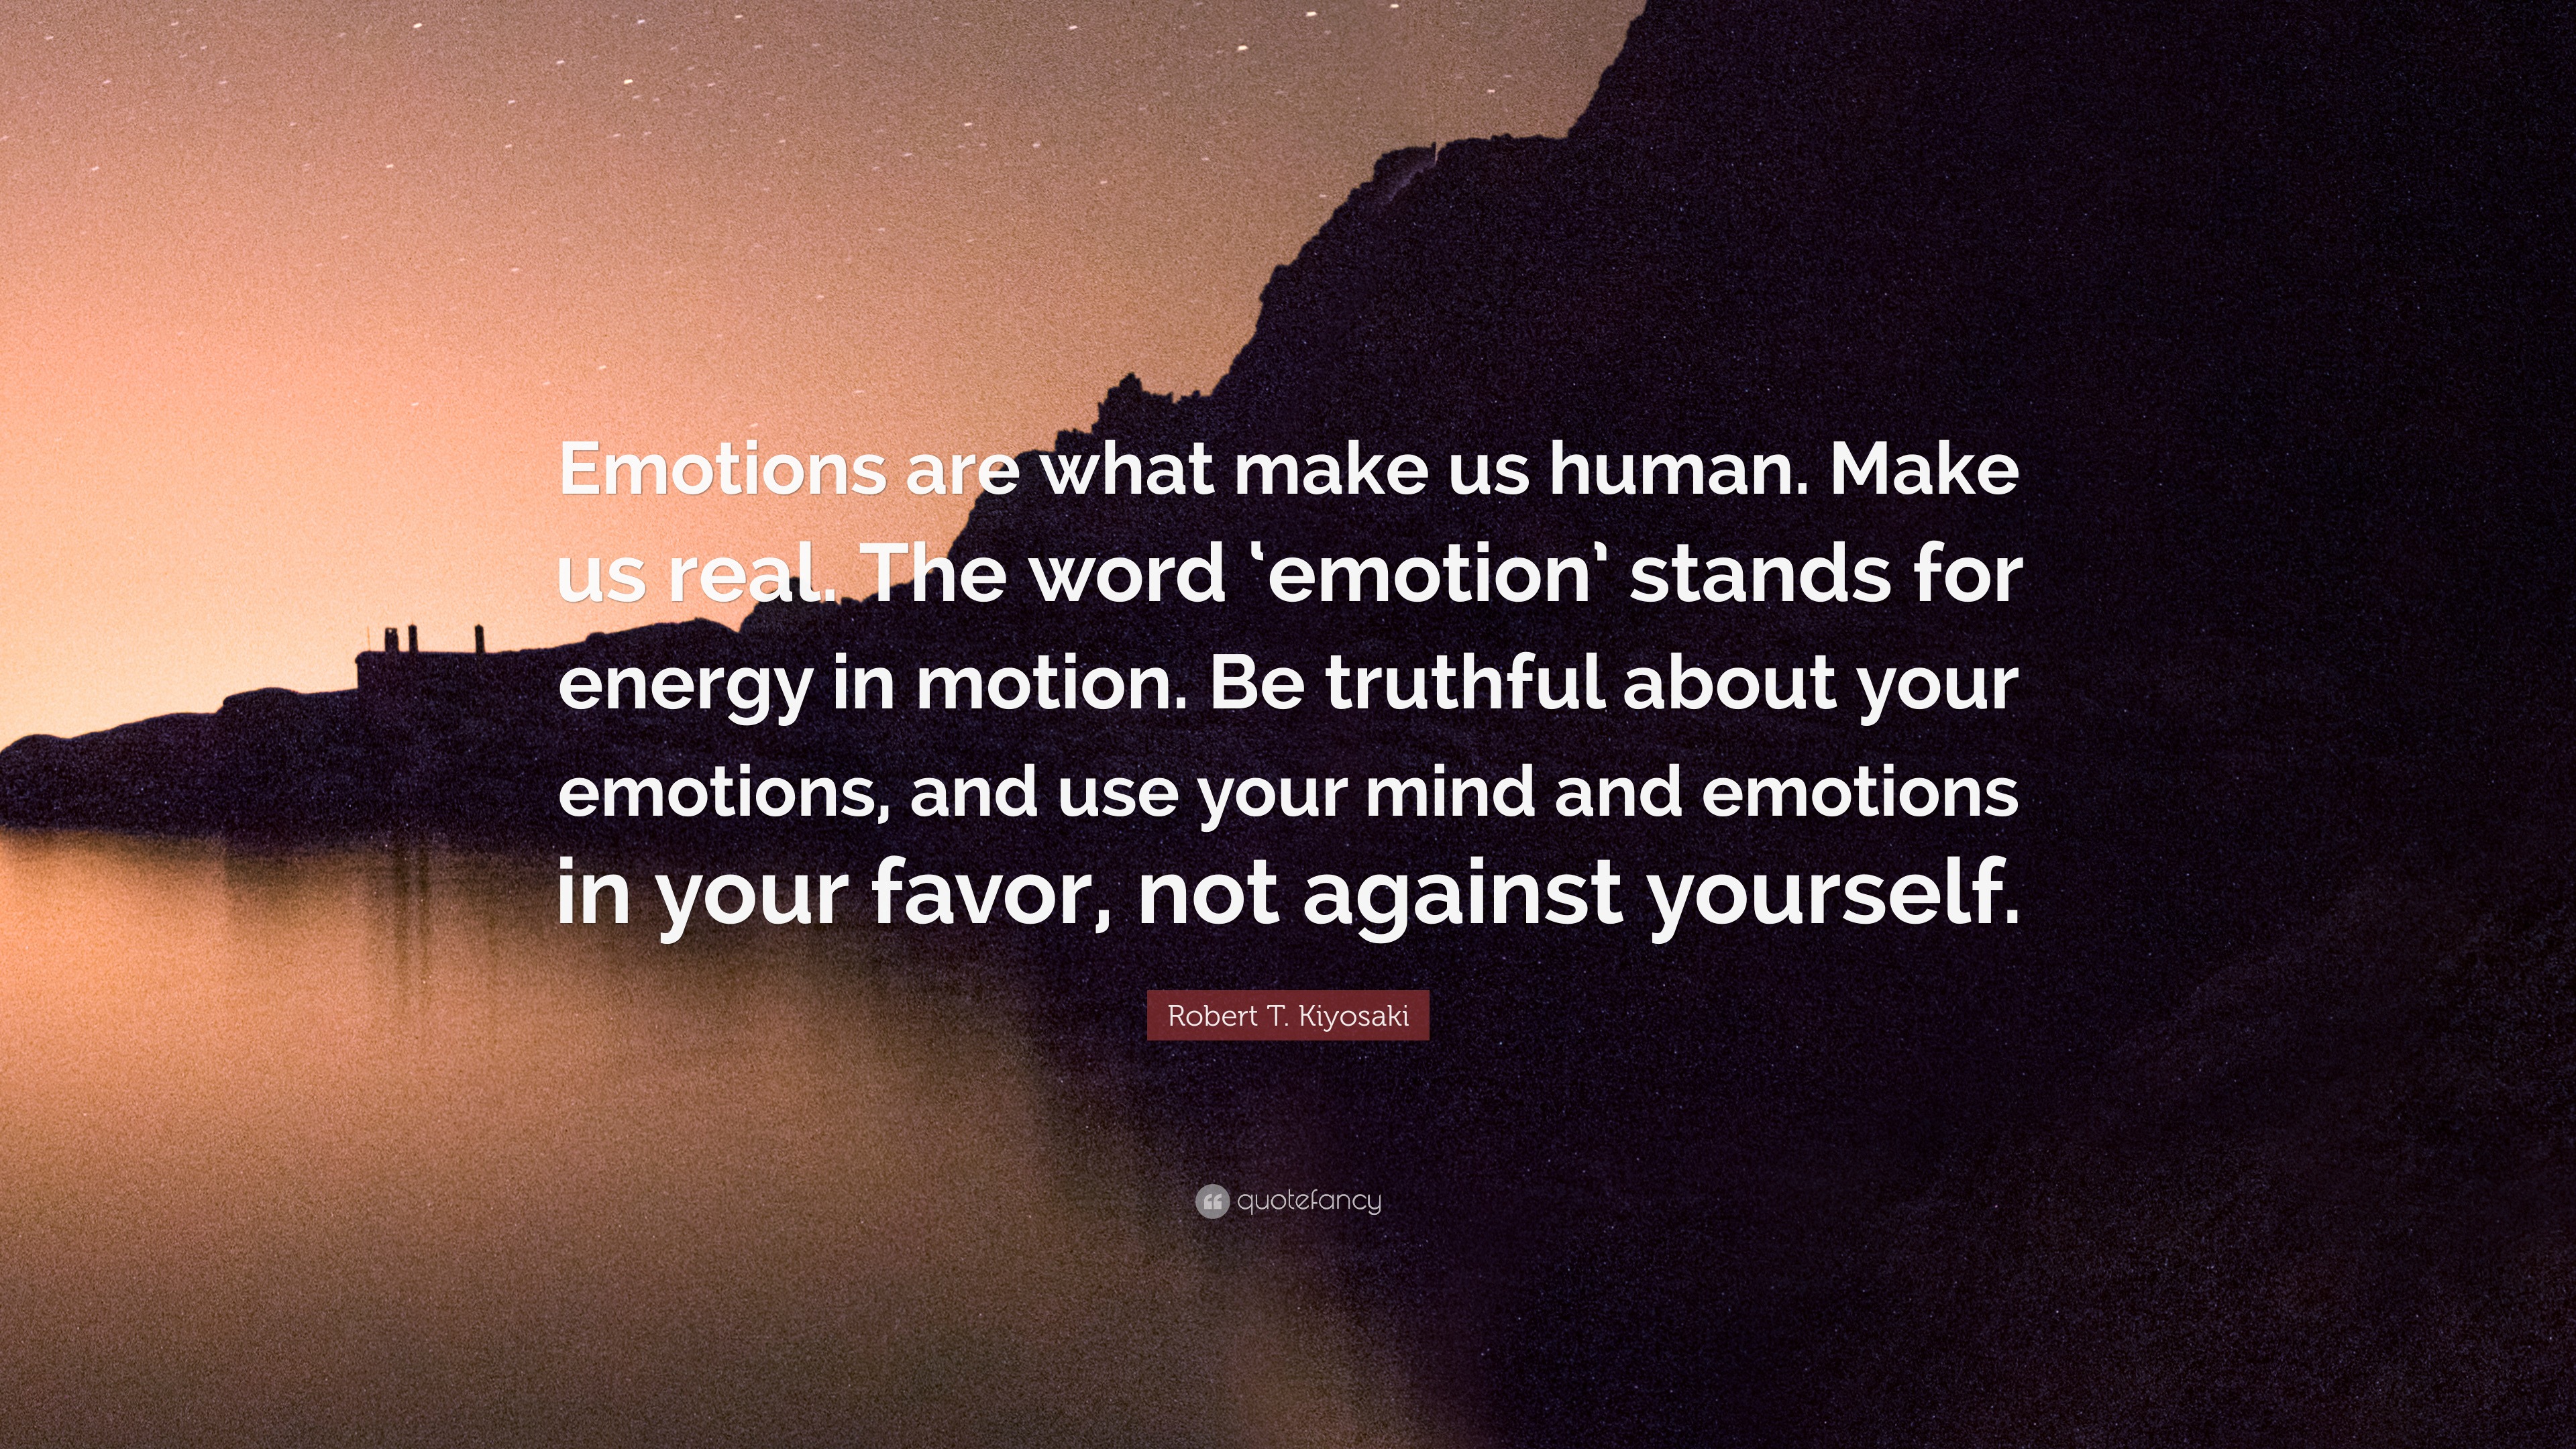 Robert T Kiyosaki Quote “Emotions are what make us human Make us